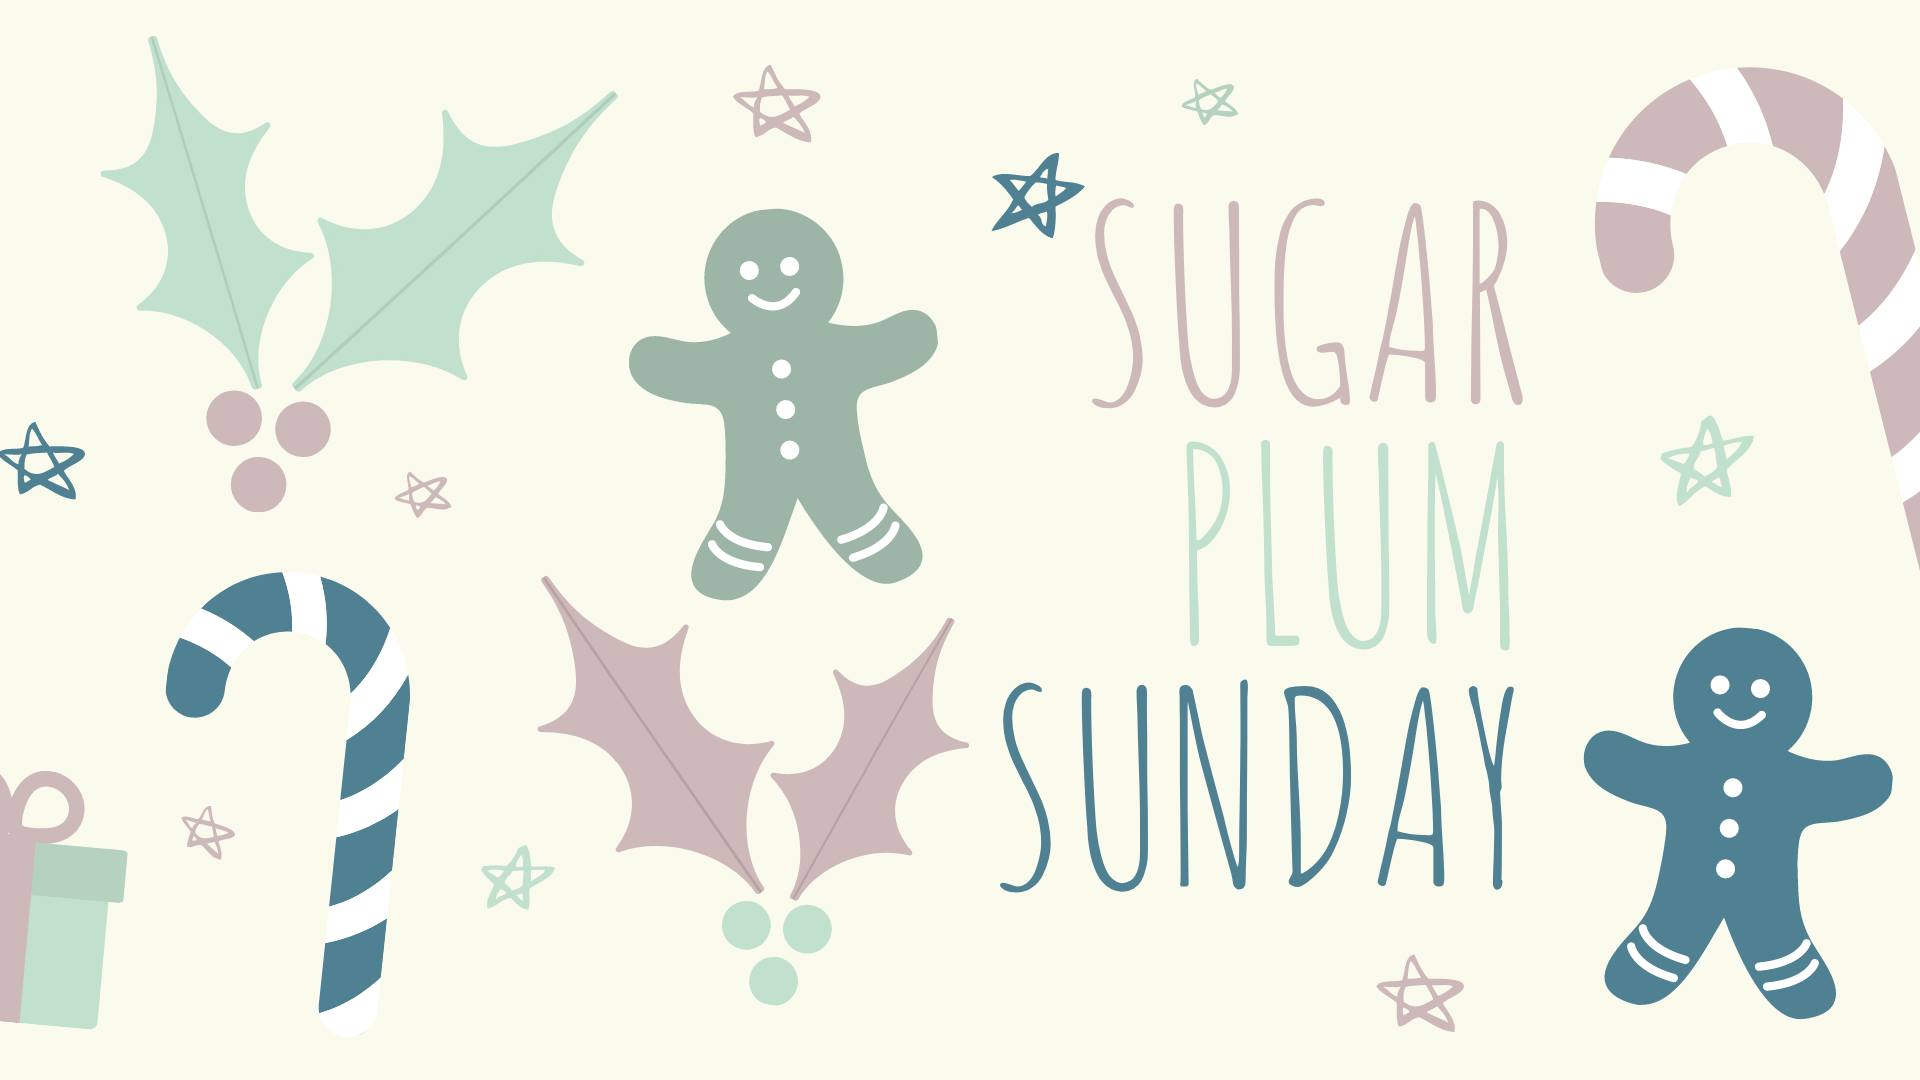 Sugar Plum Sunday